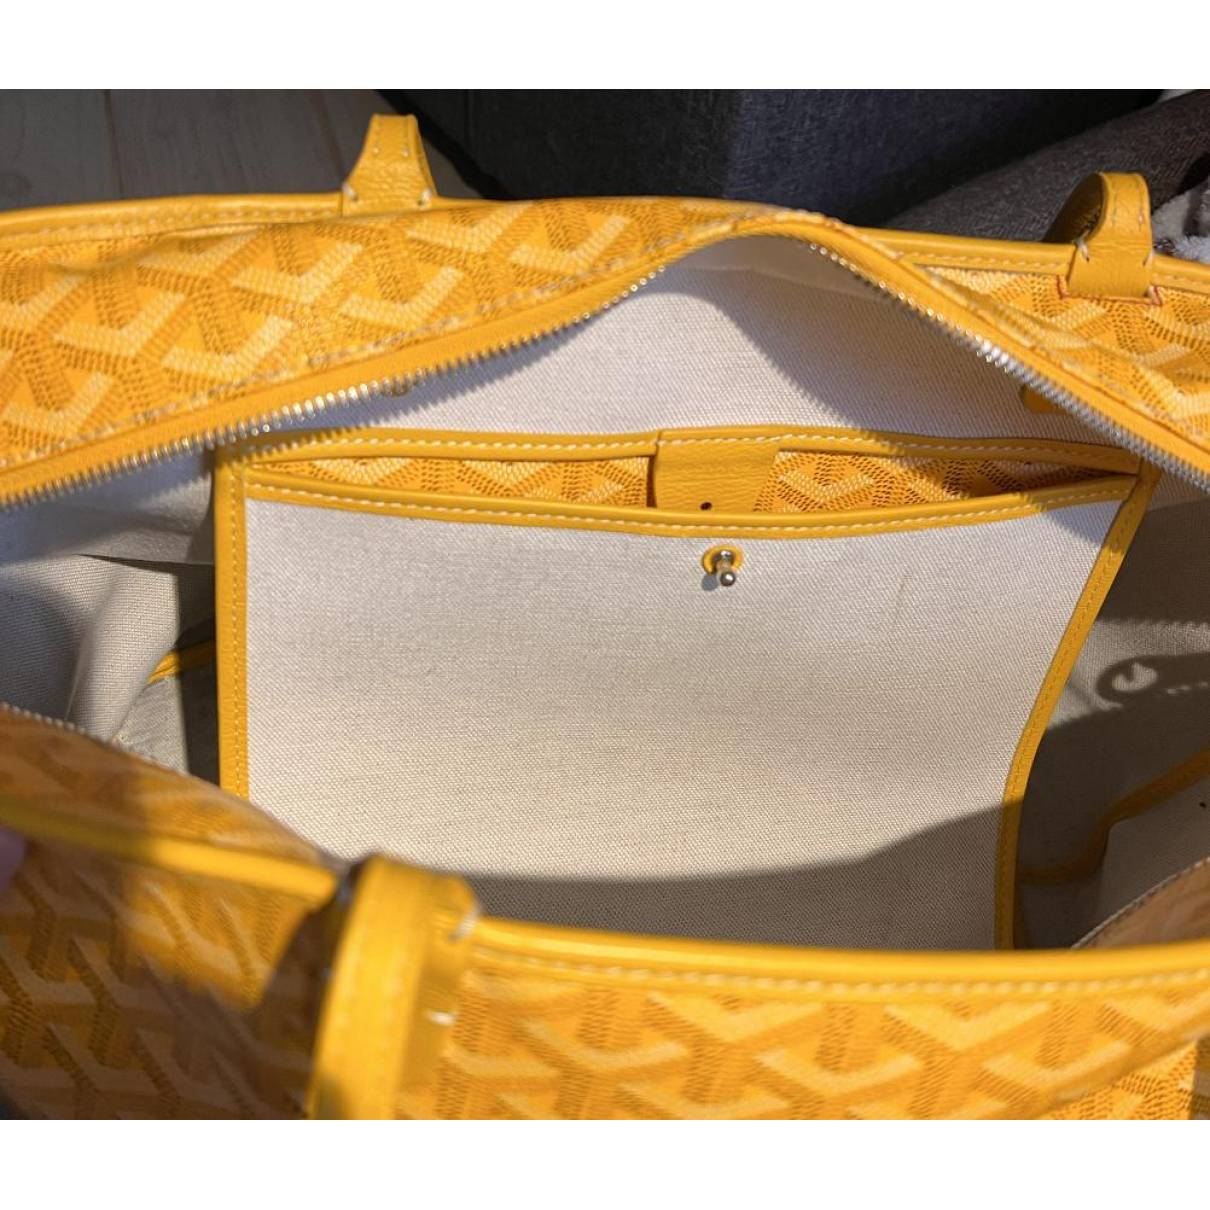 Artois handbag Goyard Yellow in Synthetic - 26414005